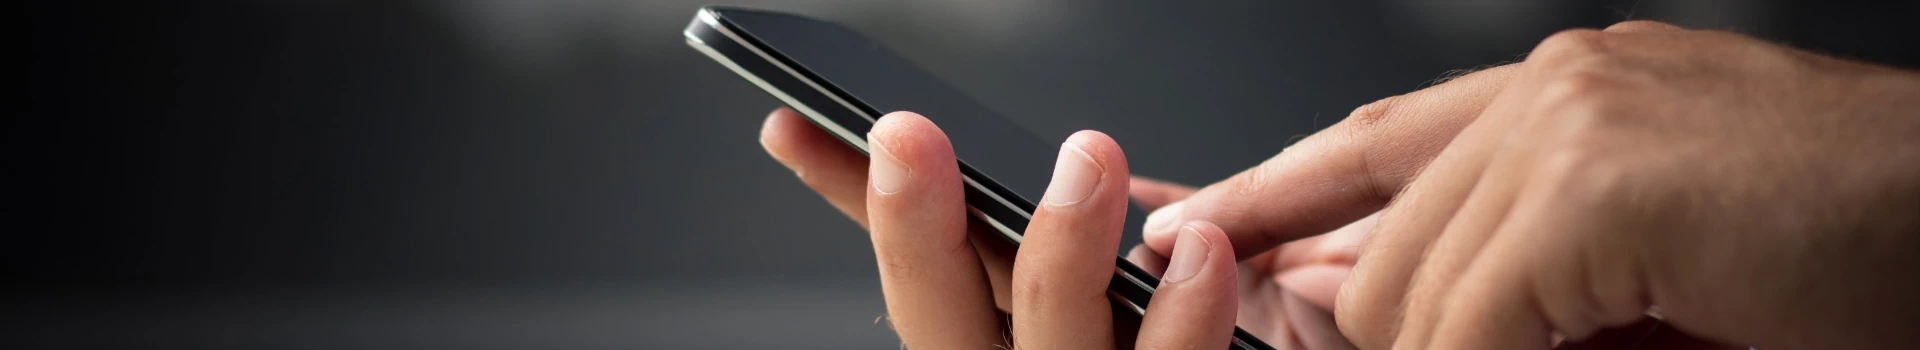 smartfon w dłoni